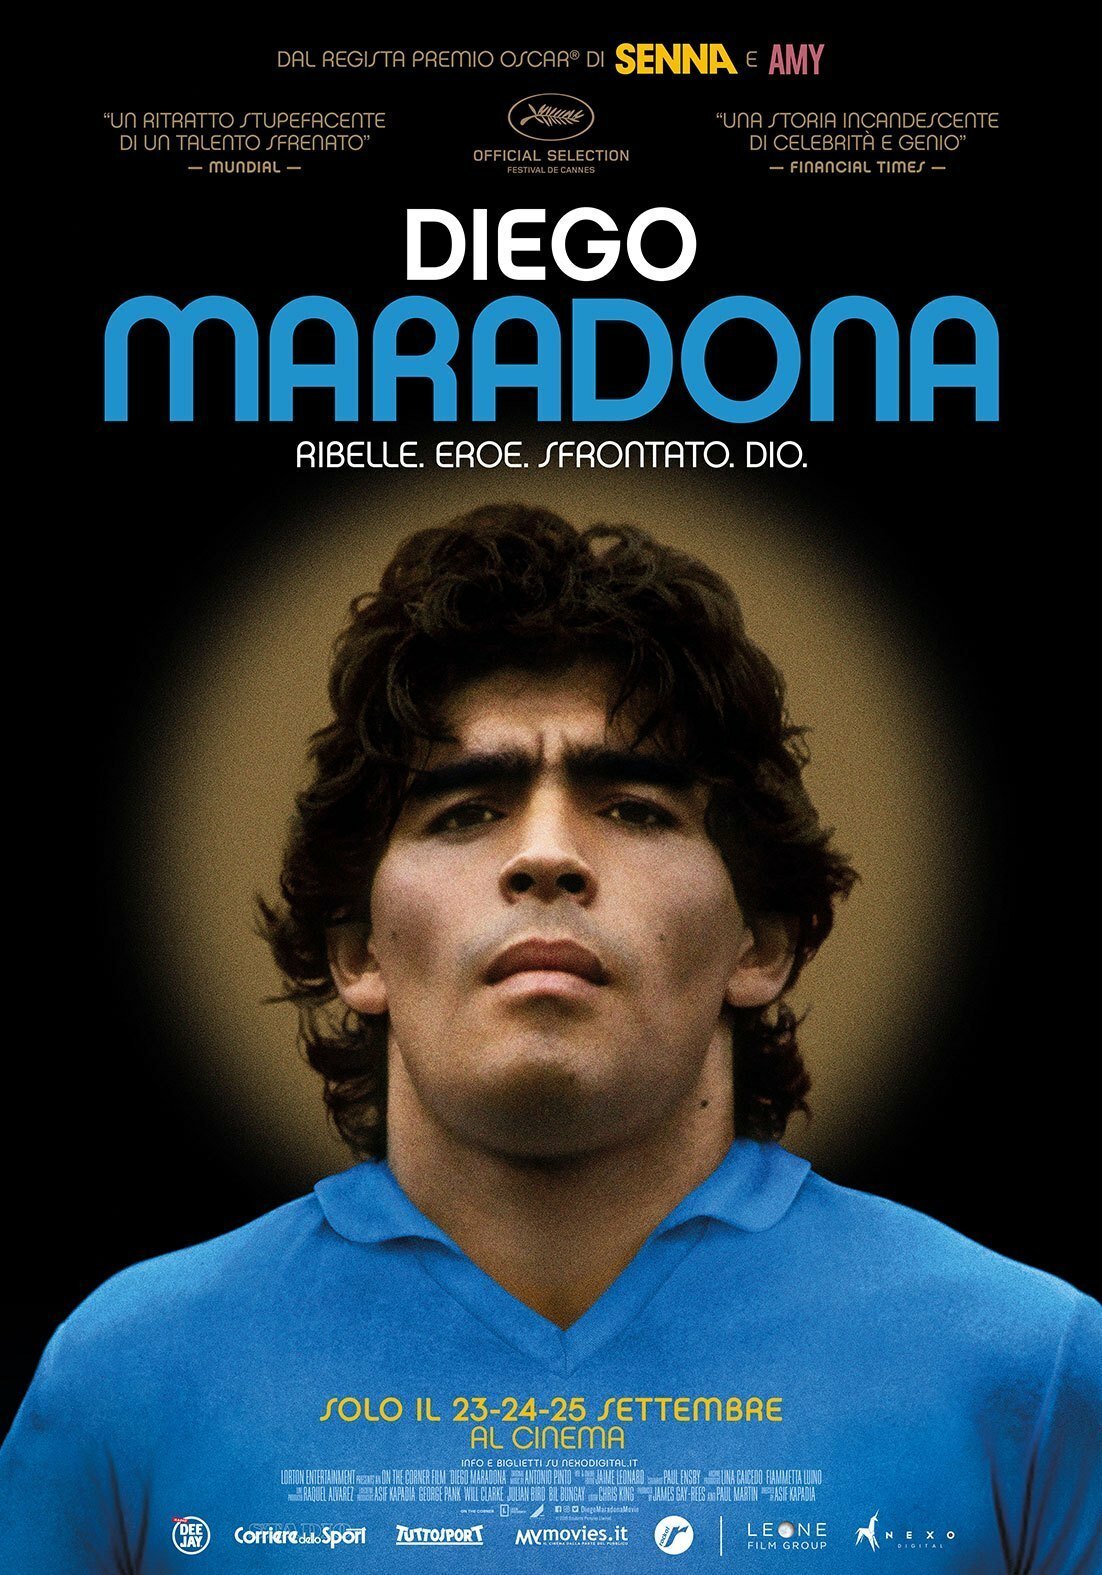 Il poster del docu-film Diego Maradona